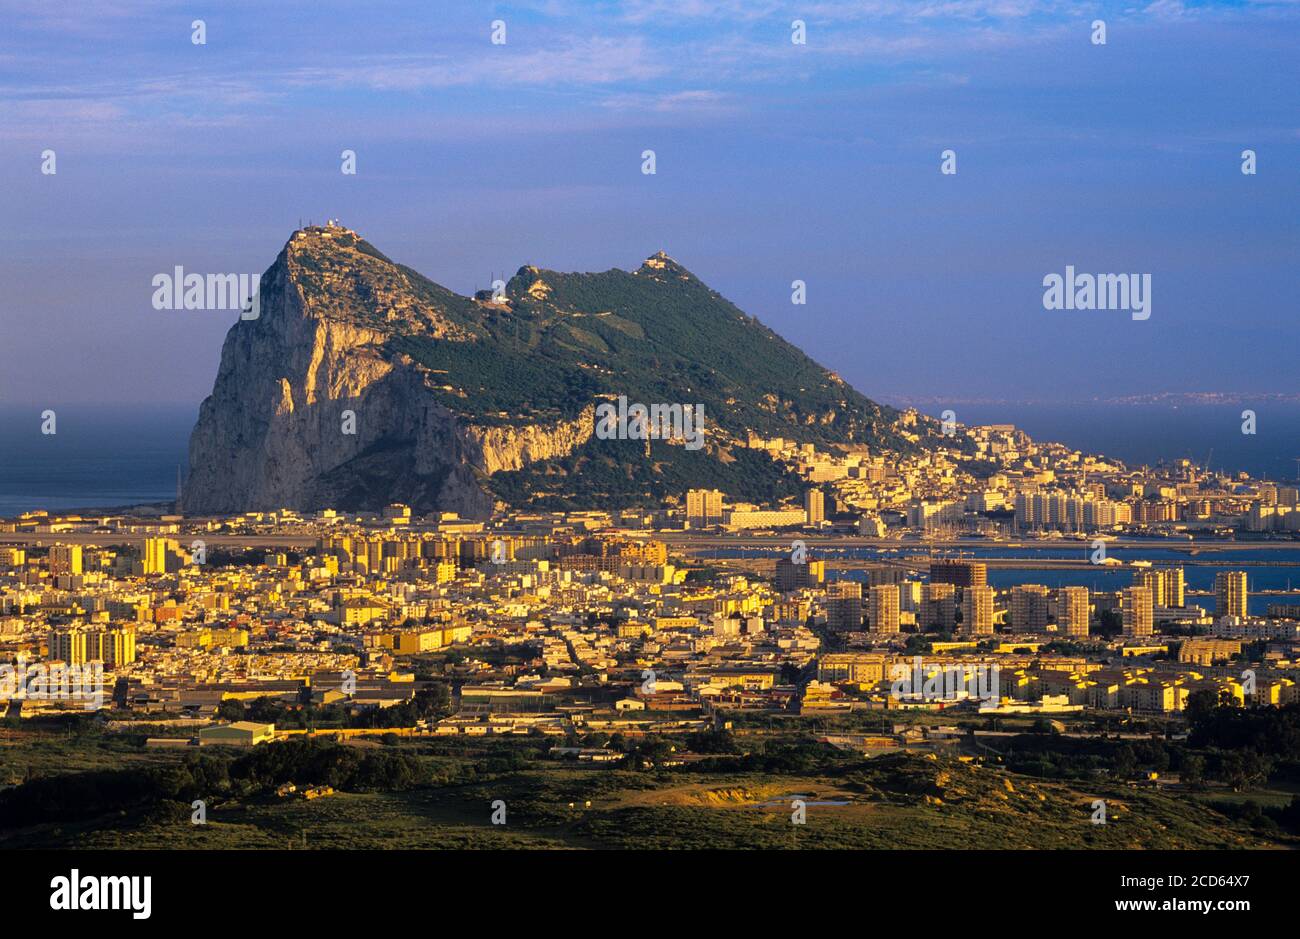 Rocher de Gibraltar et ville de Gibraltar Banque D'Images